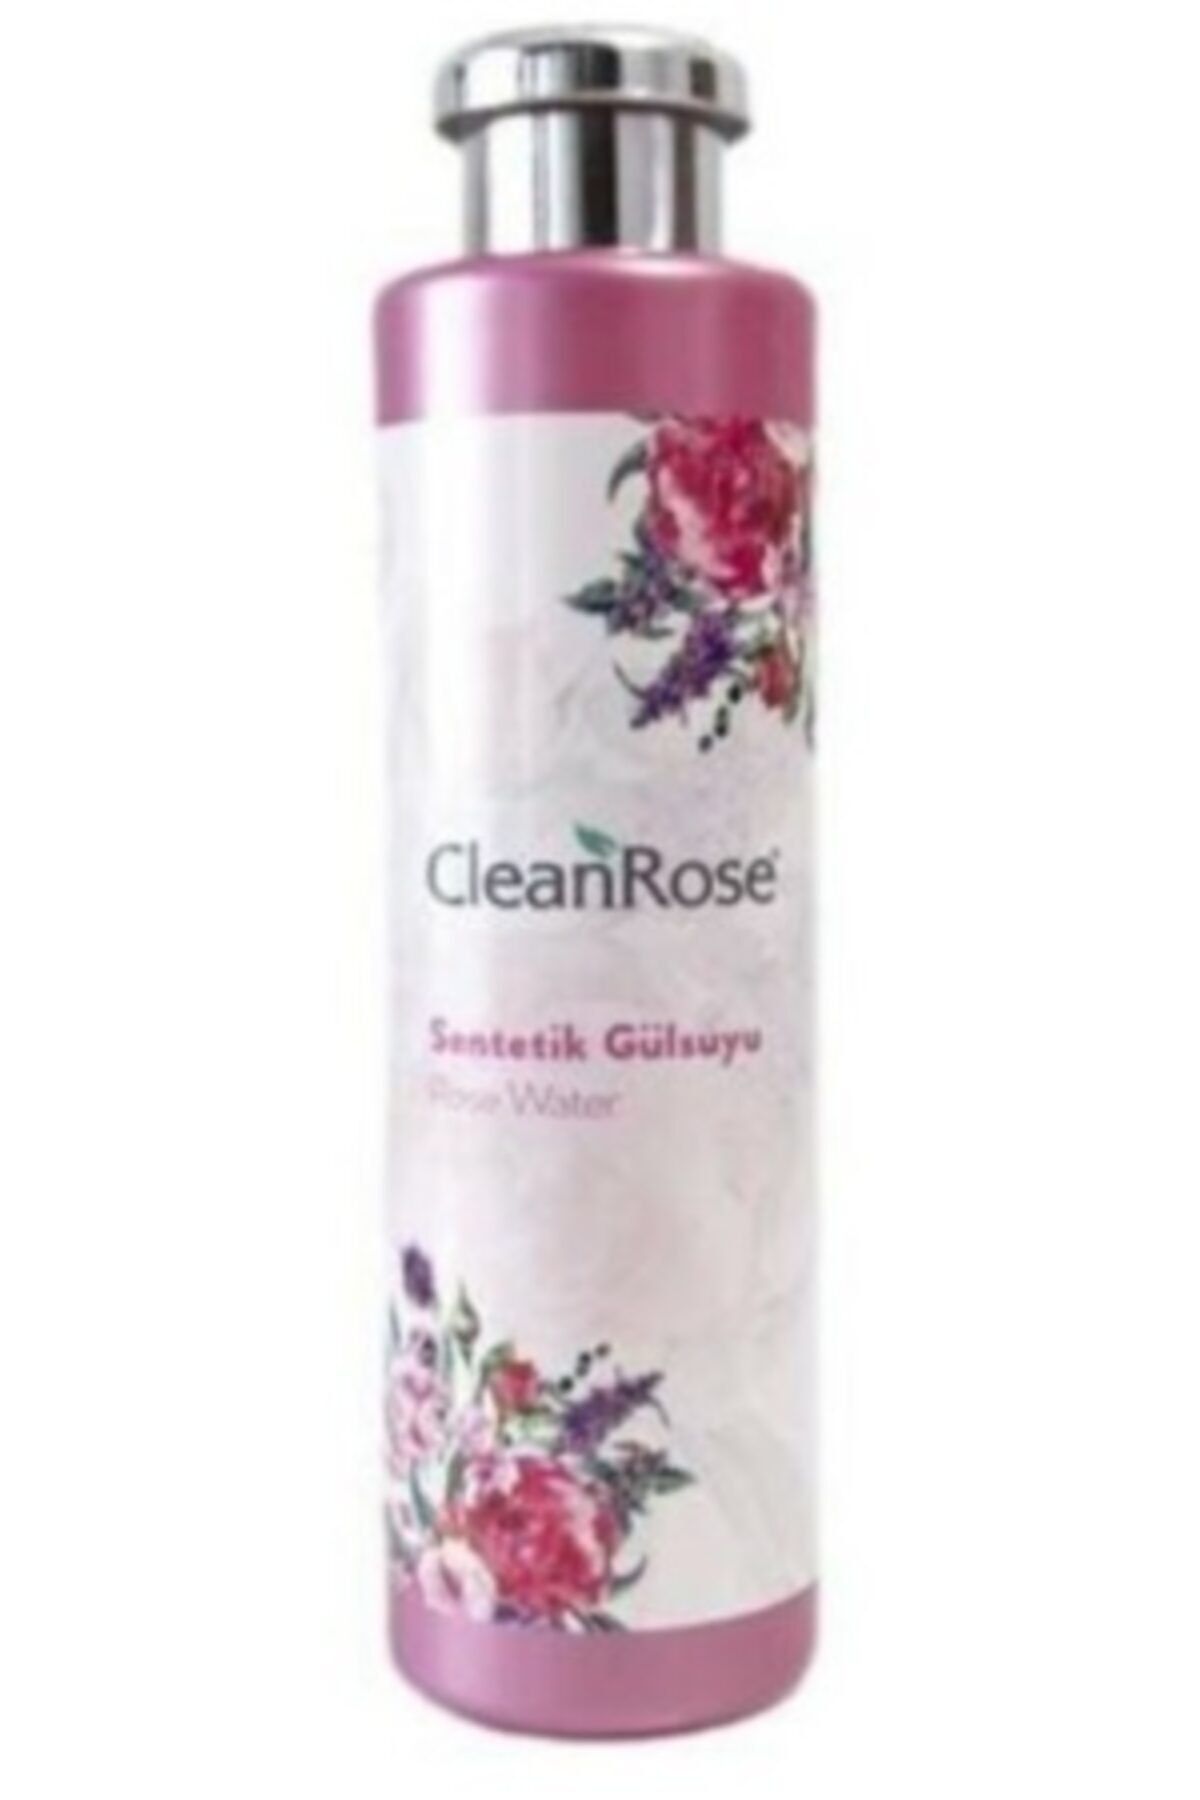 Clean Rose Lüx Cleanrose Sentetik Gül Suyu 400 ml